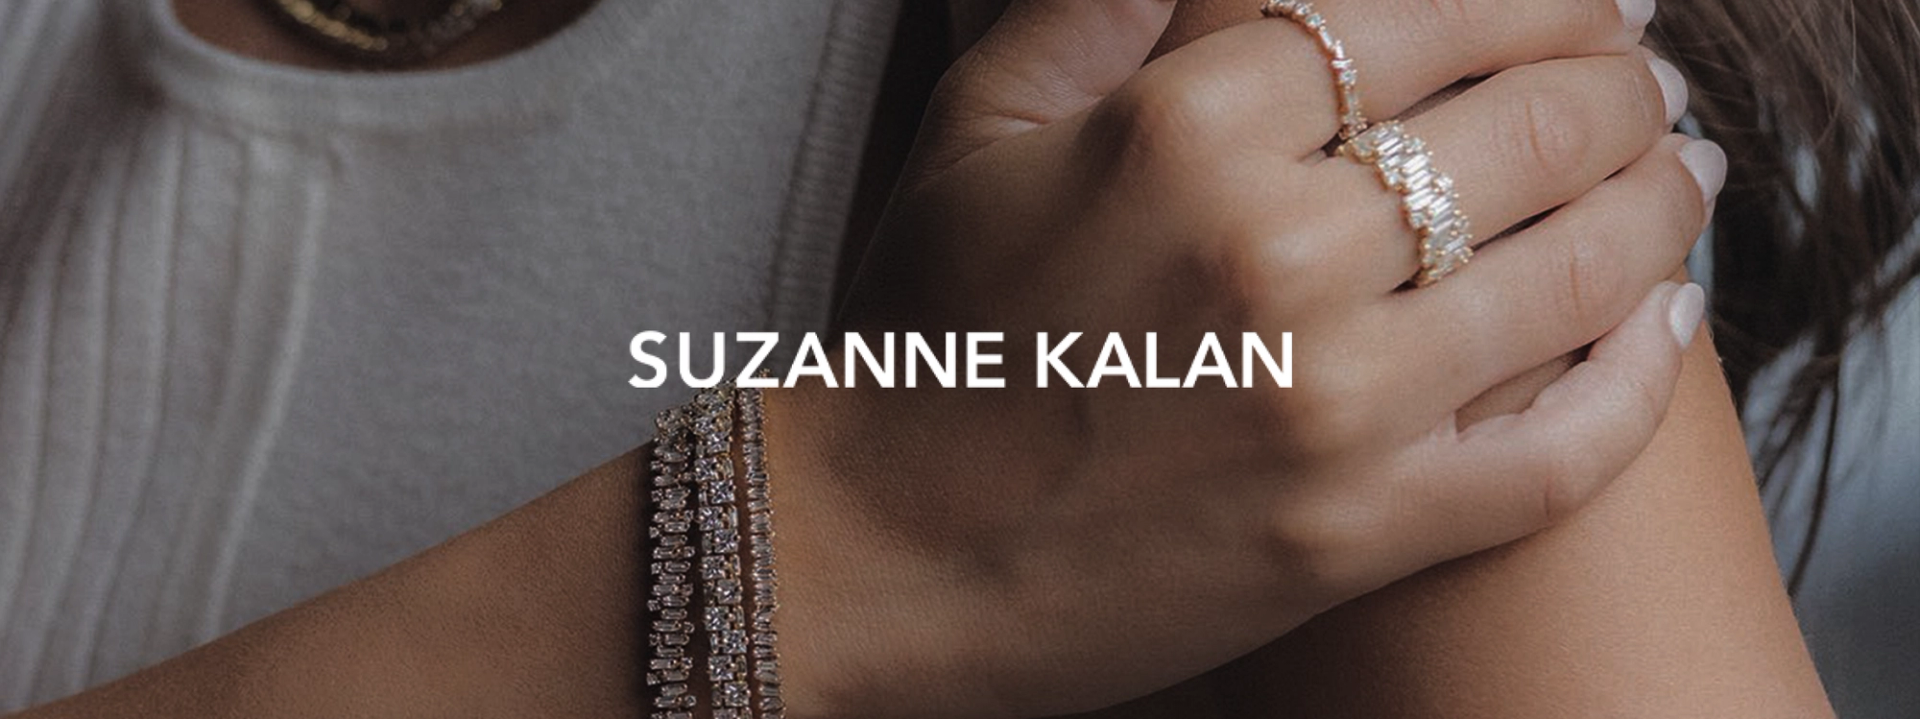 Suzanne Kalan’s #DoubleTheLove: Redefining Luxury Marketing on TikTok